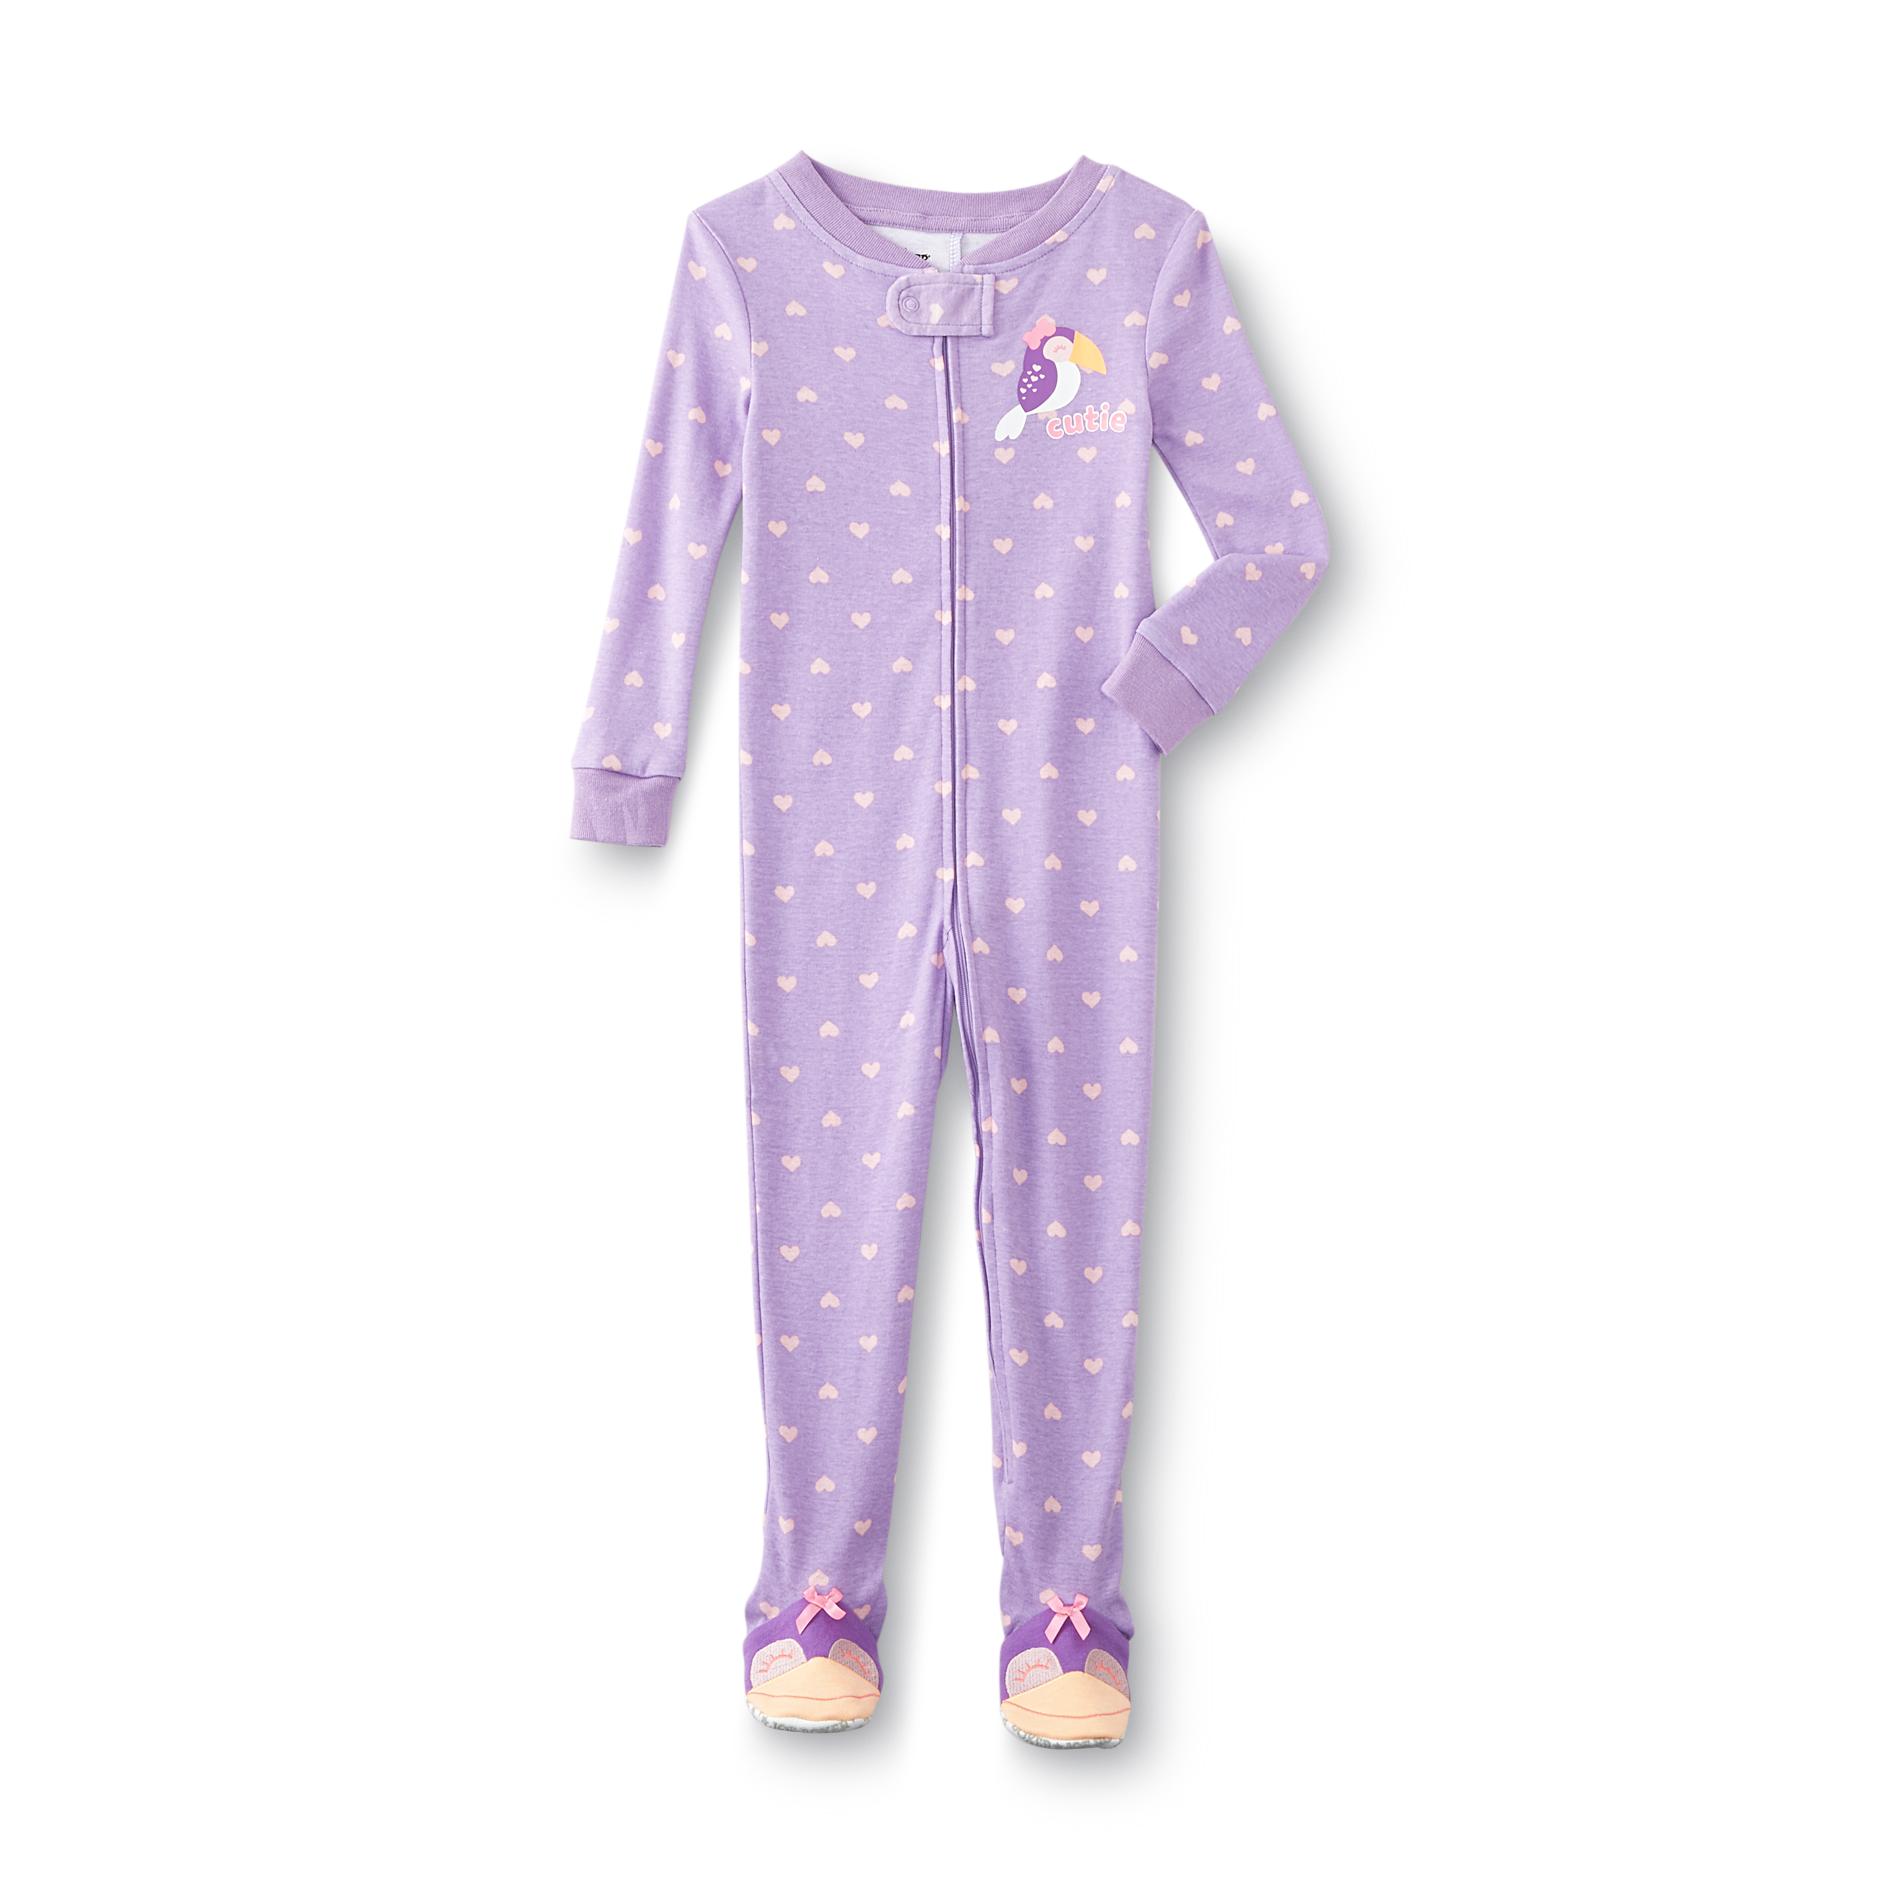 Joe Boxer Infant & Toddler Girl's Sleeper Pajamas - Cutie Toucan